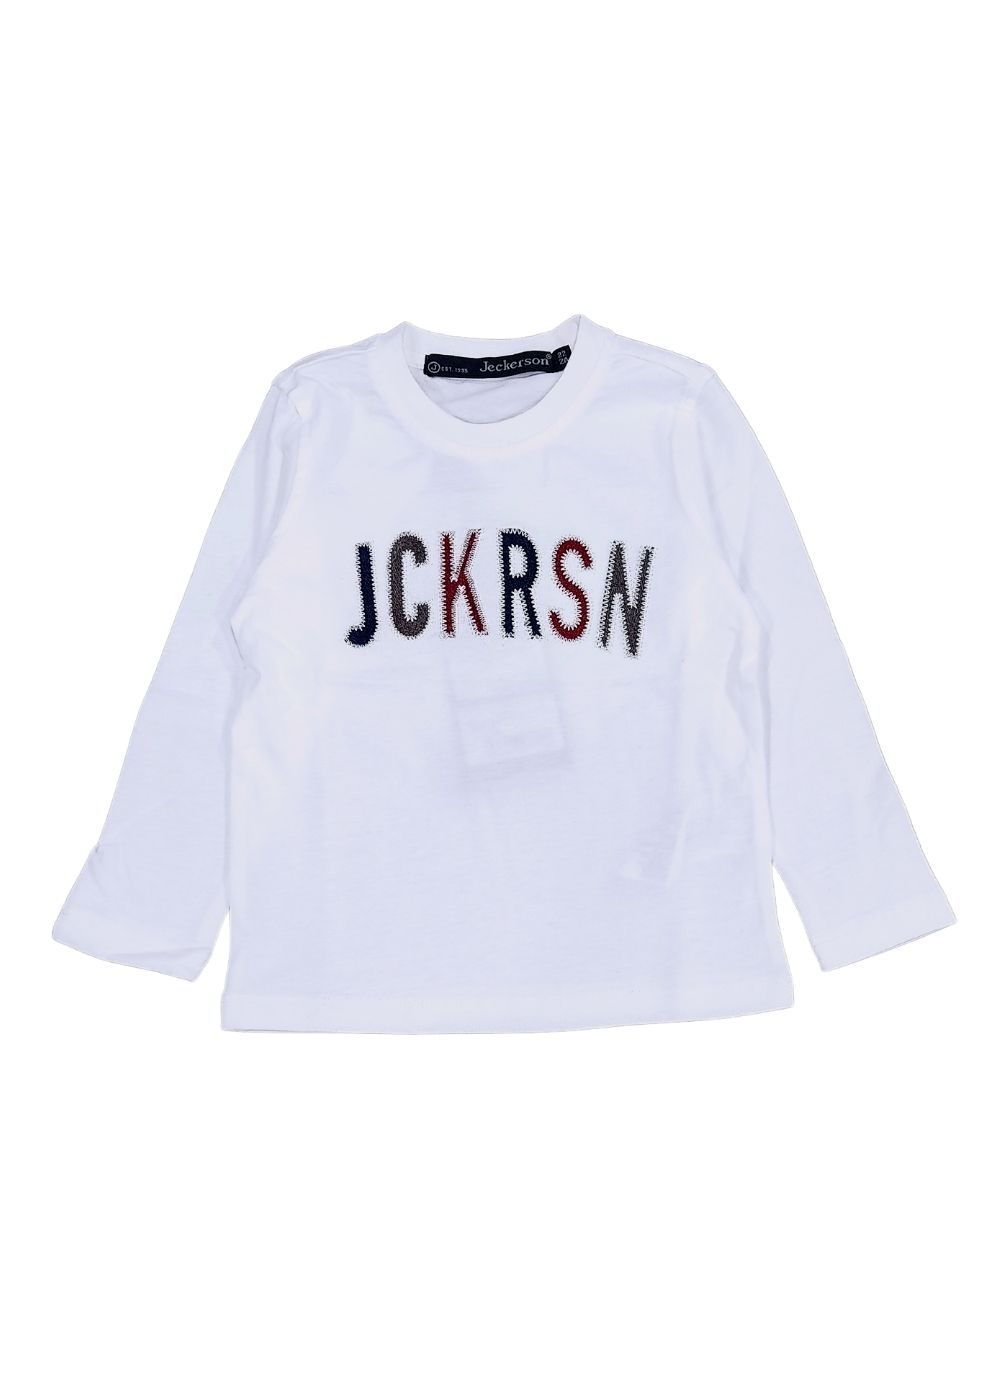 Featured image for “JECKERSON T-SHIRT "JCKRSN"”